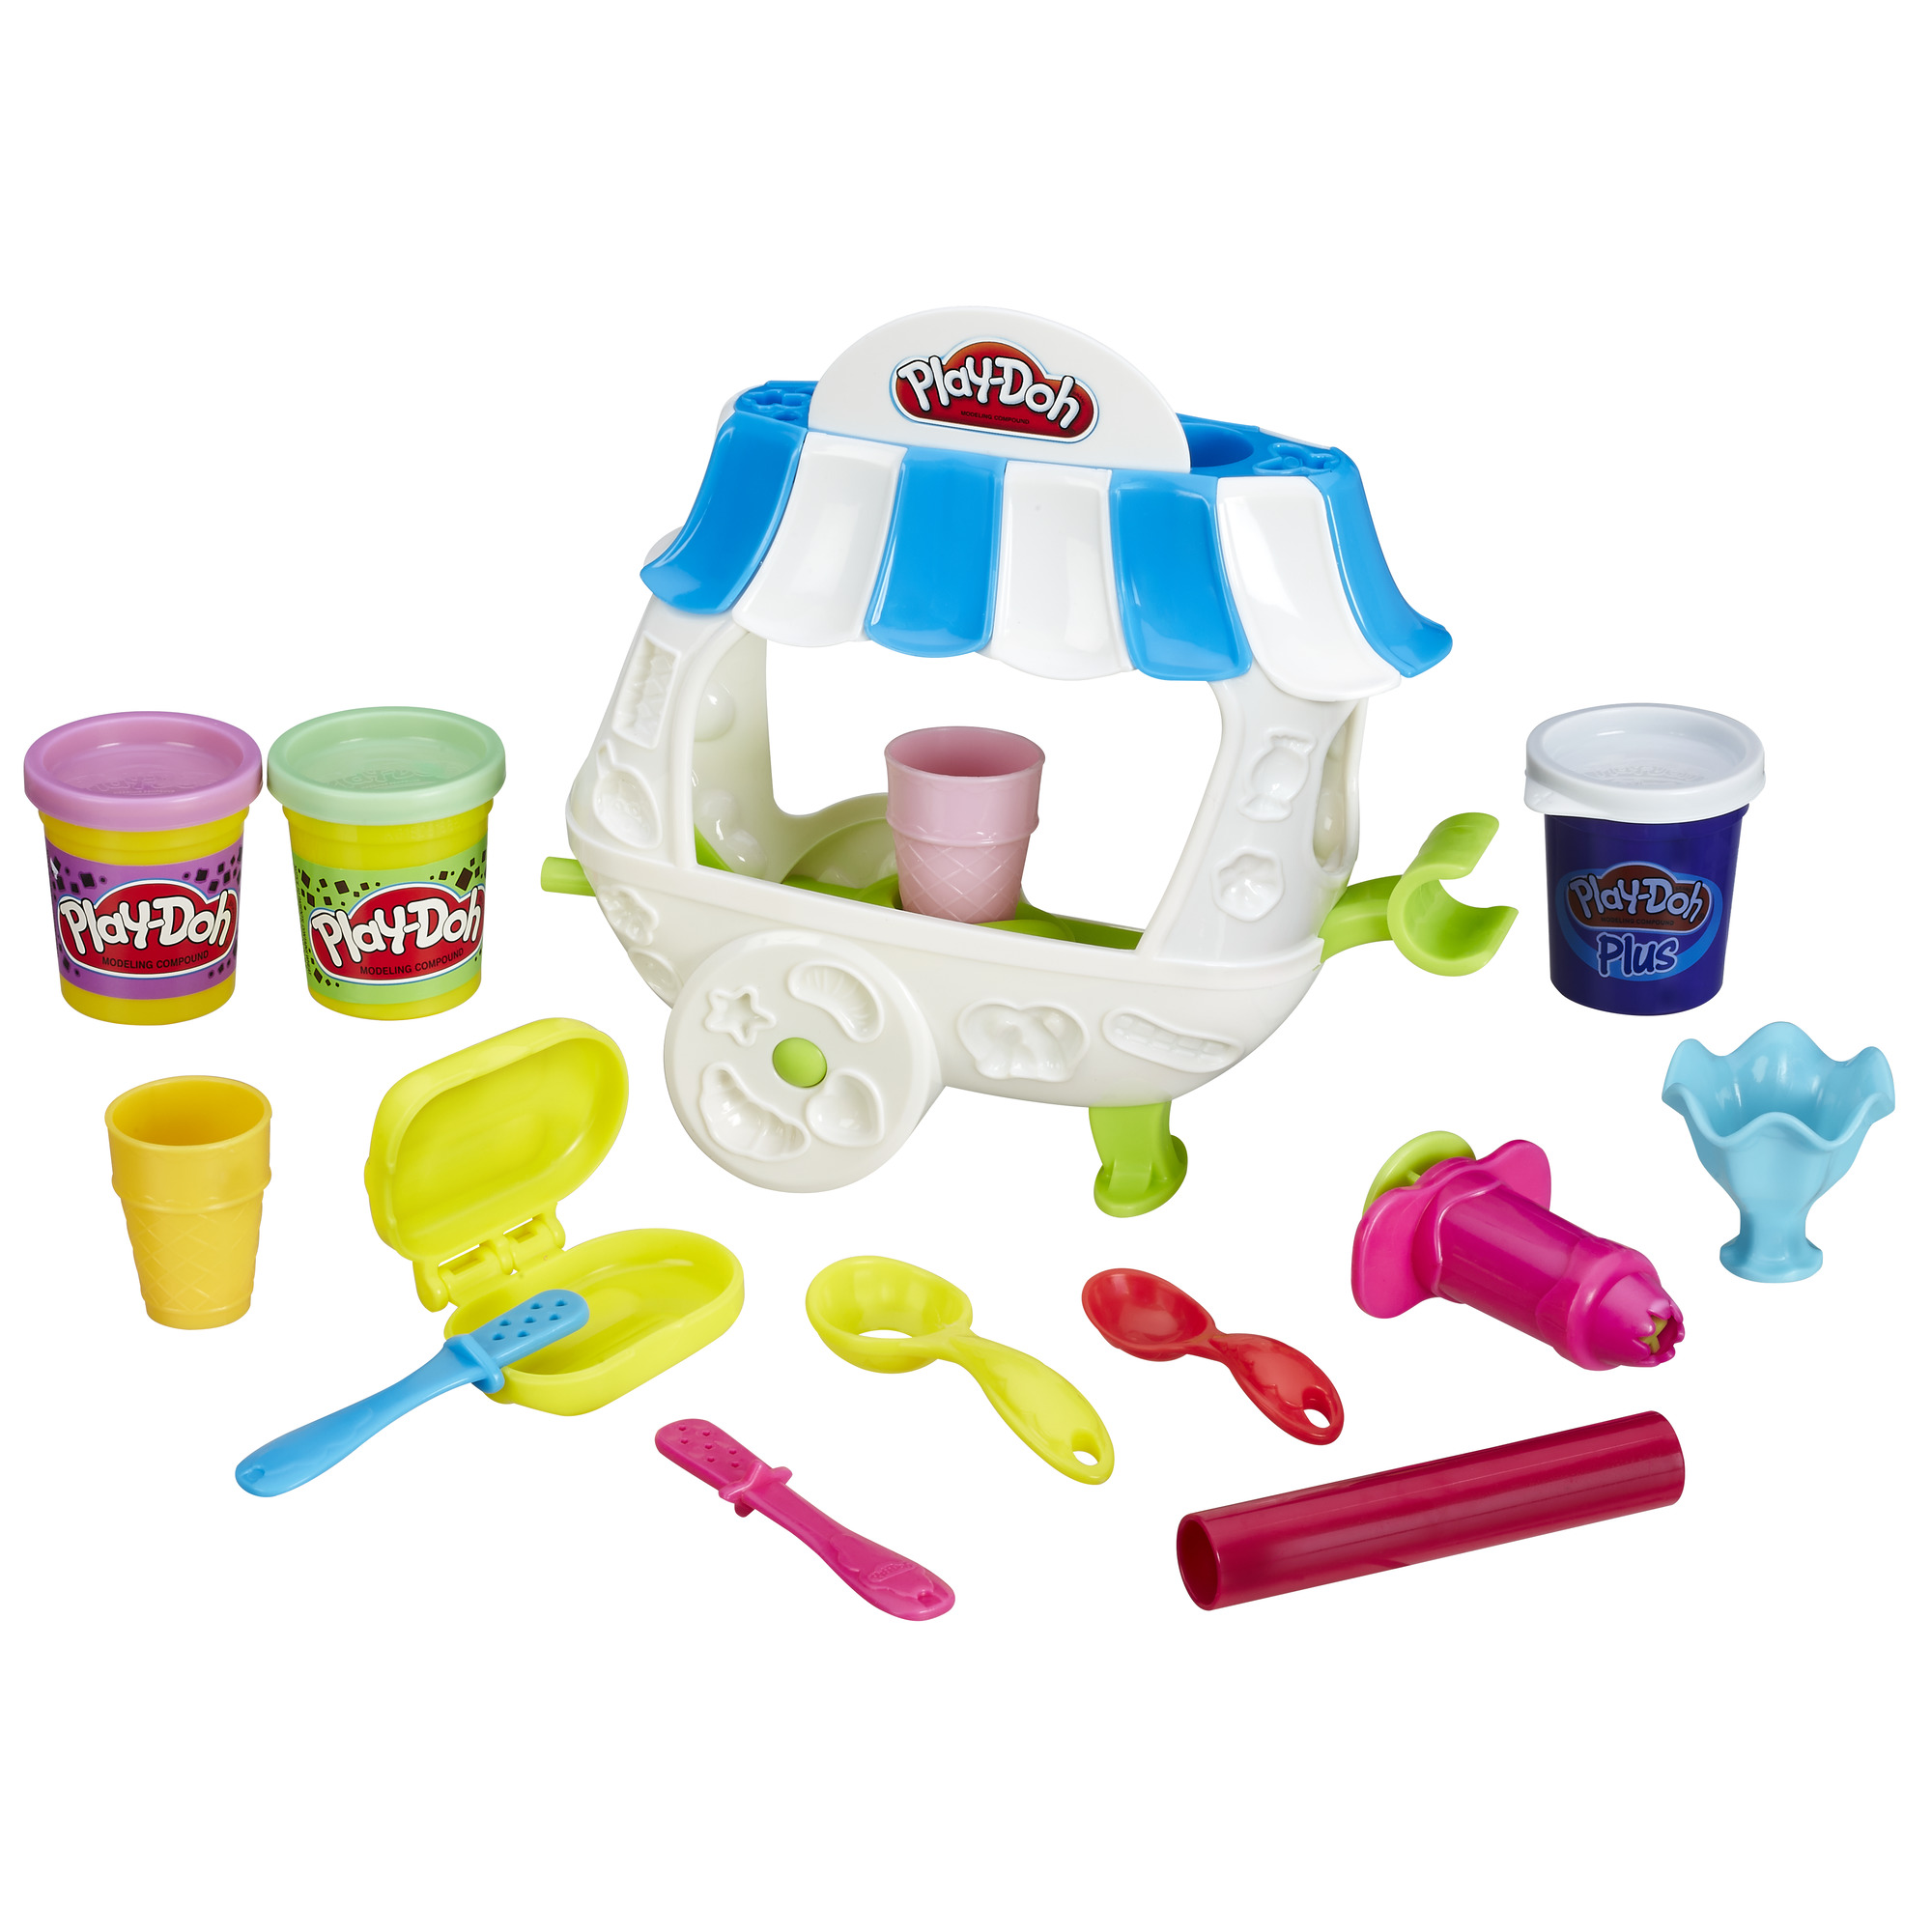 Play-Doh 15 Piece Sweet Shoppe Sundae Cart Plastic Play Food Set, Ice Cream (Multi-color) - image 1 of 3